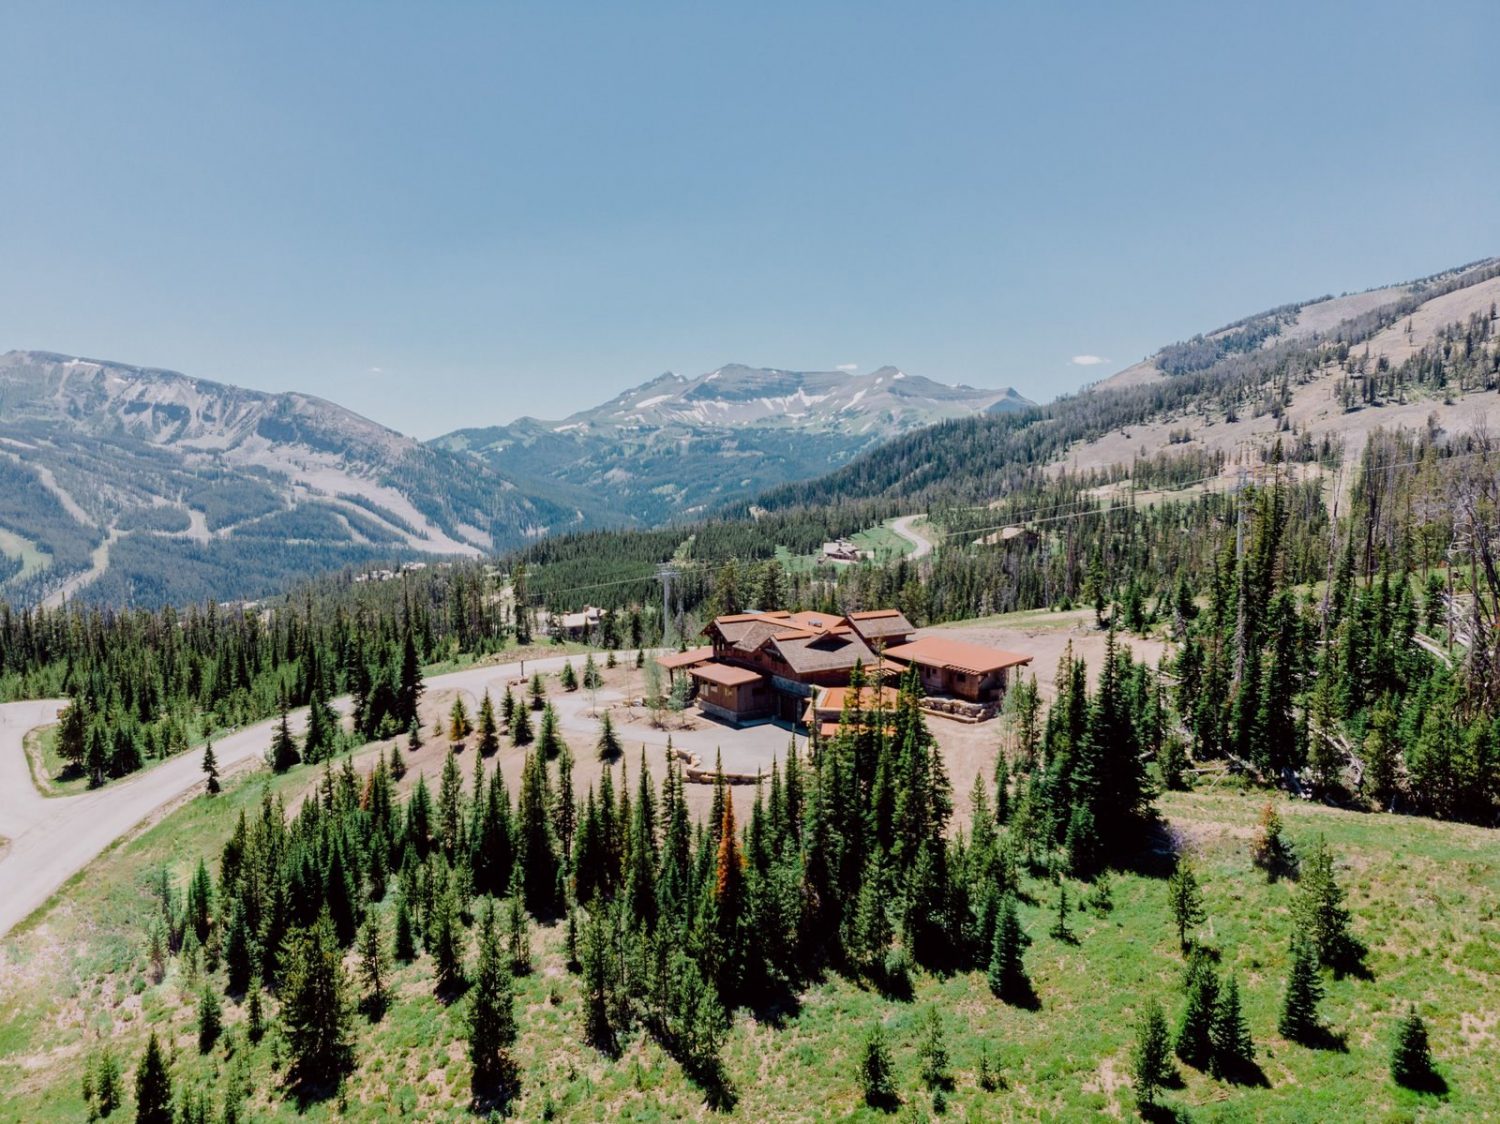 Mountain Peek | Modern Rustic Home in Montana